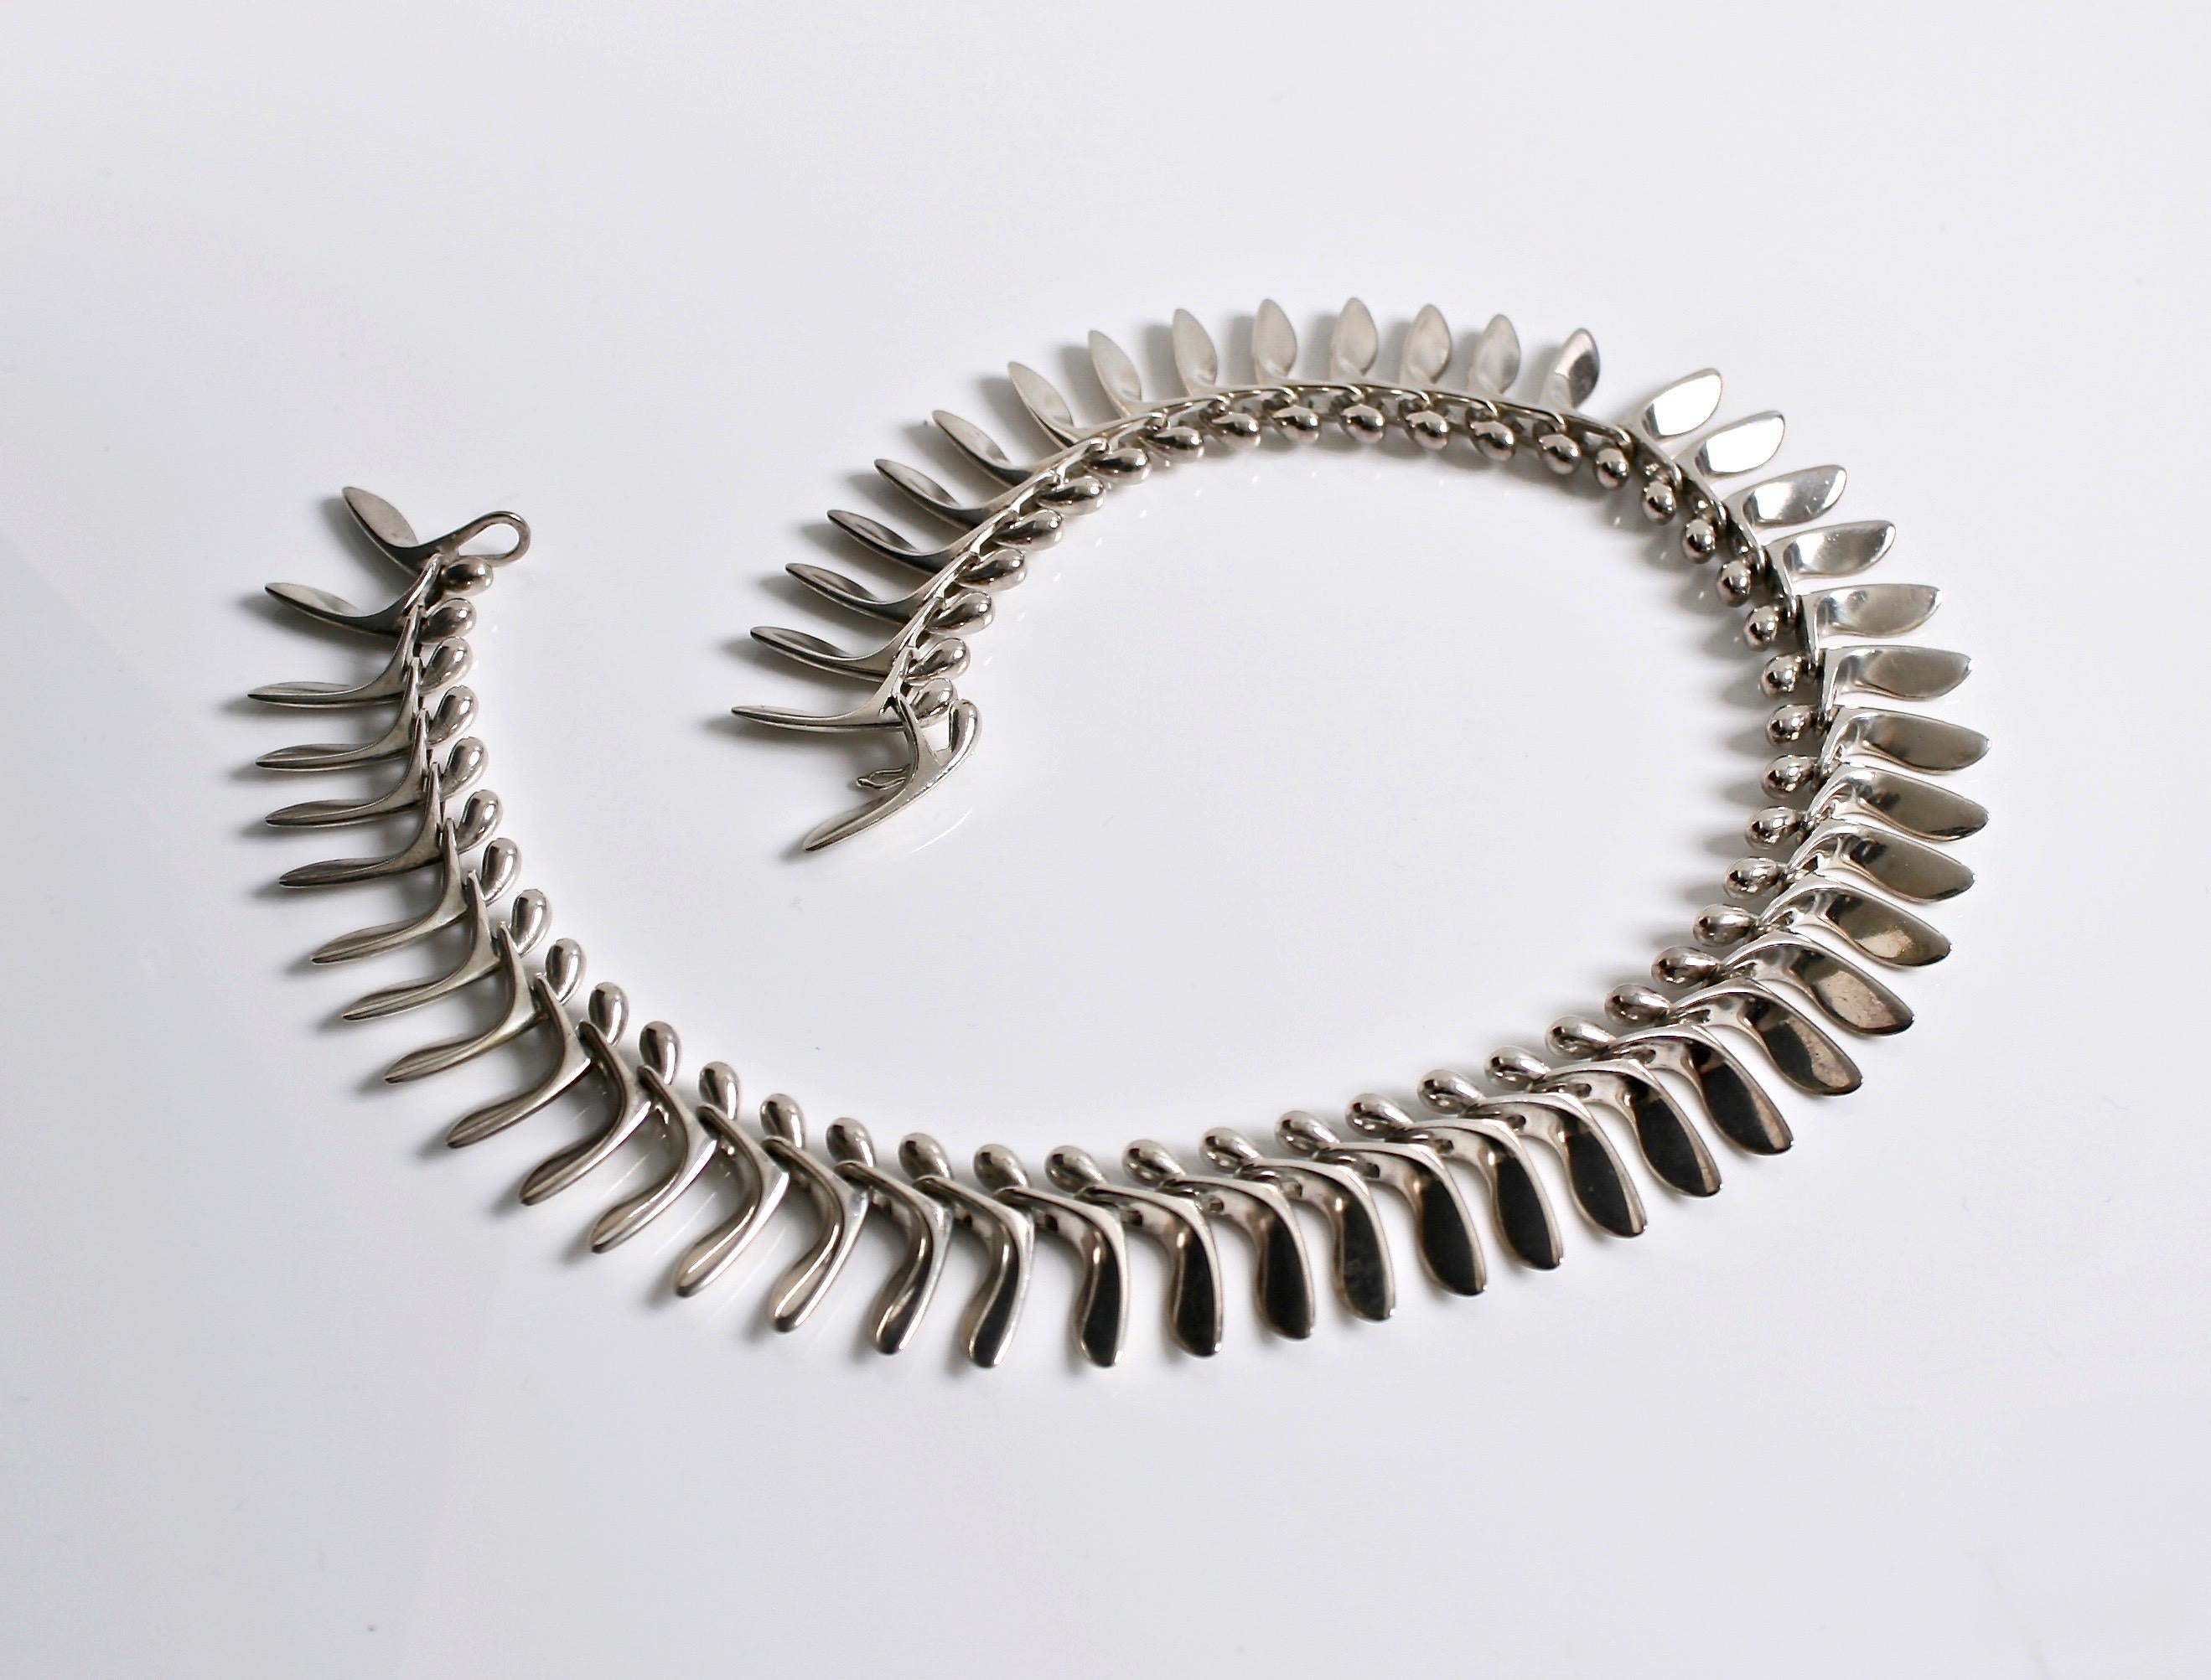 Women's Georg Jensen Sterling Silver Necklace Designed by Bent Gabrielsen, circa 1953